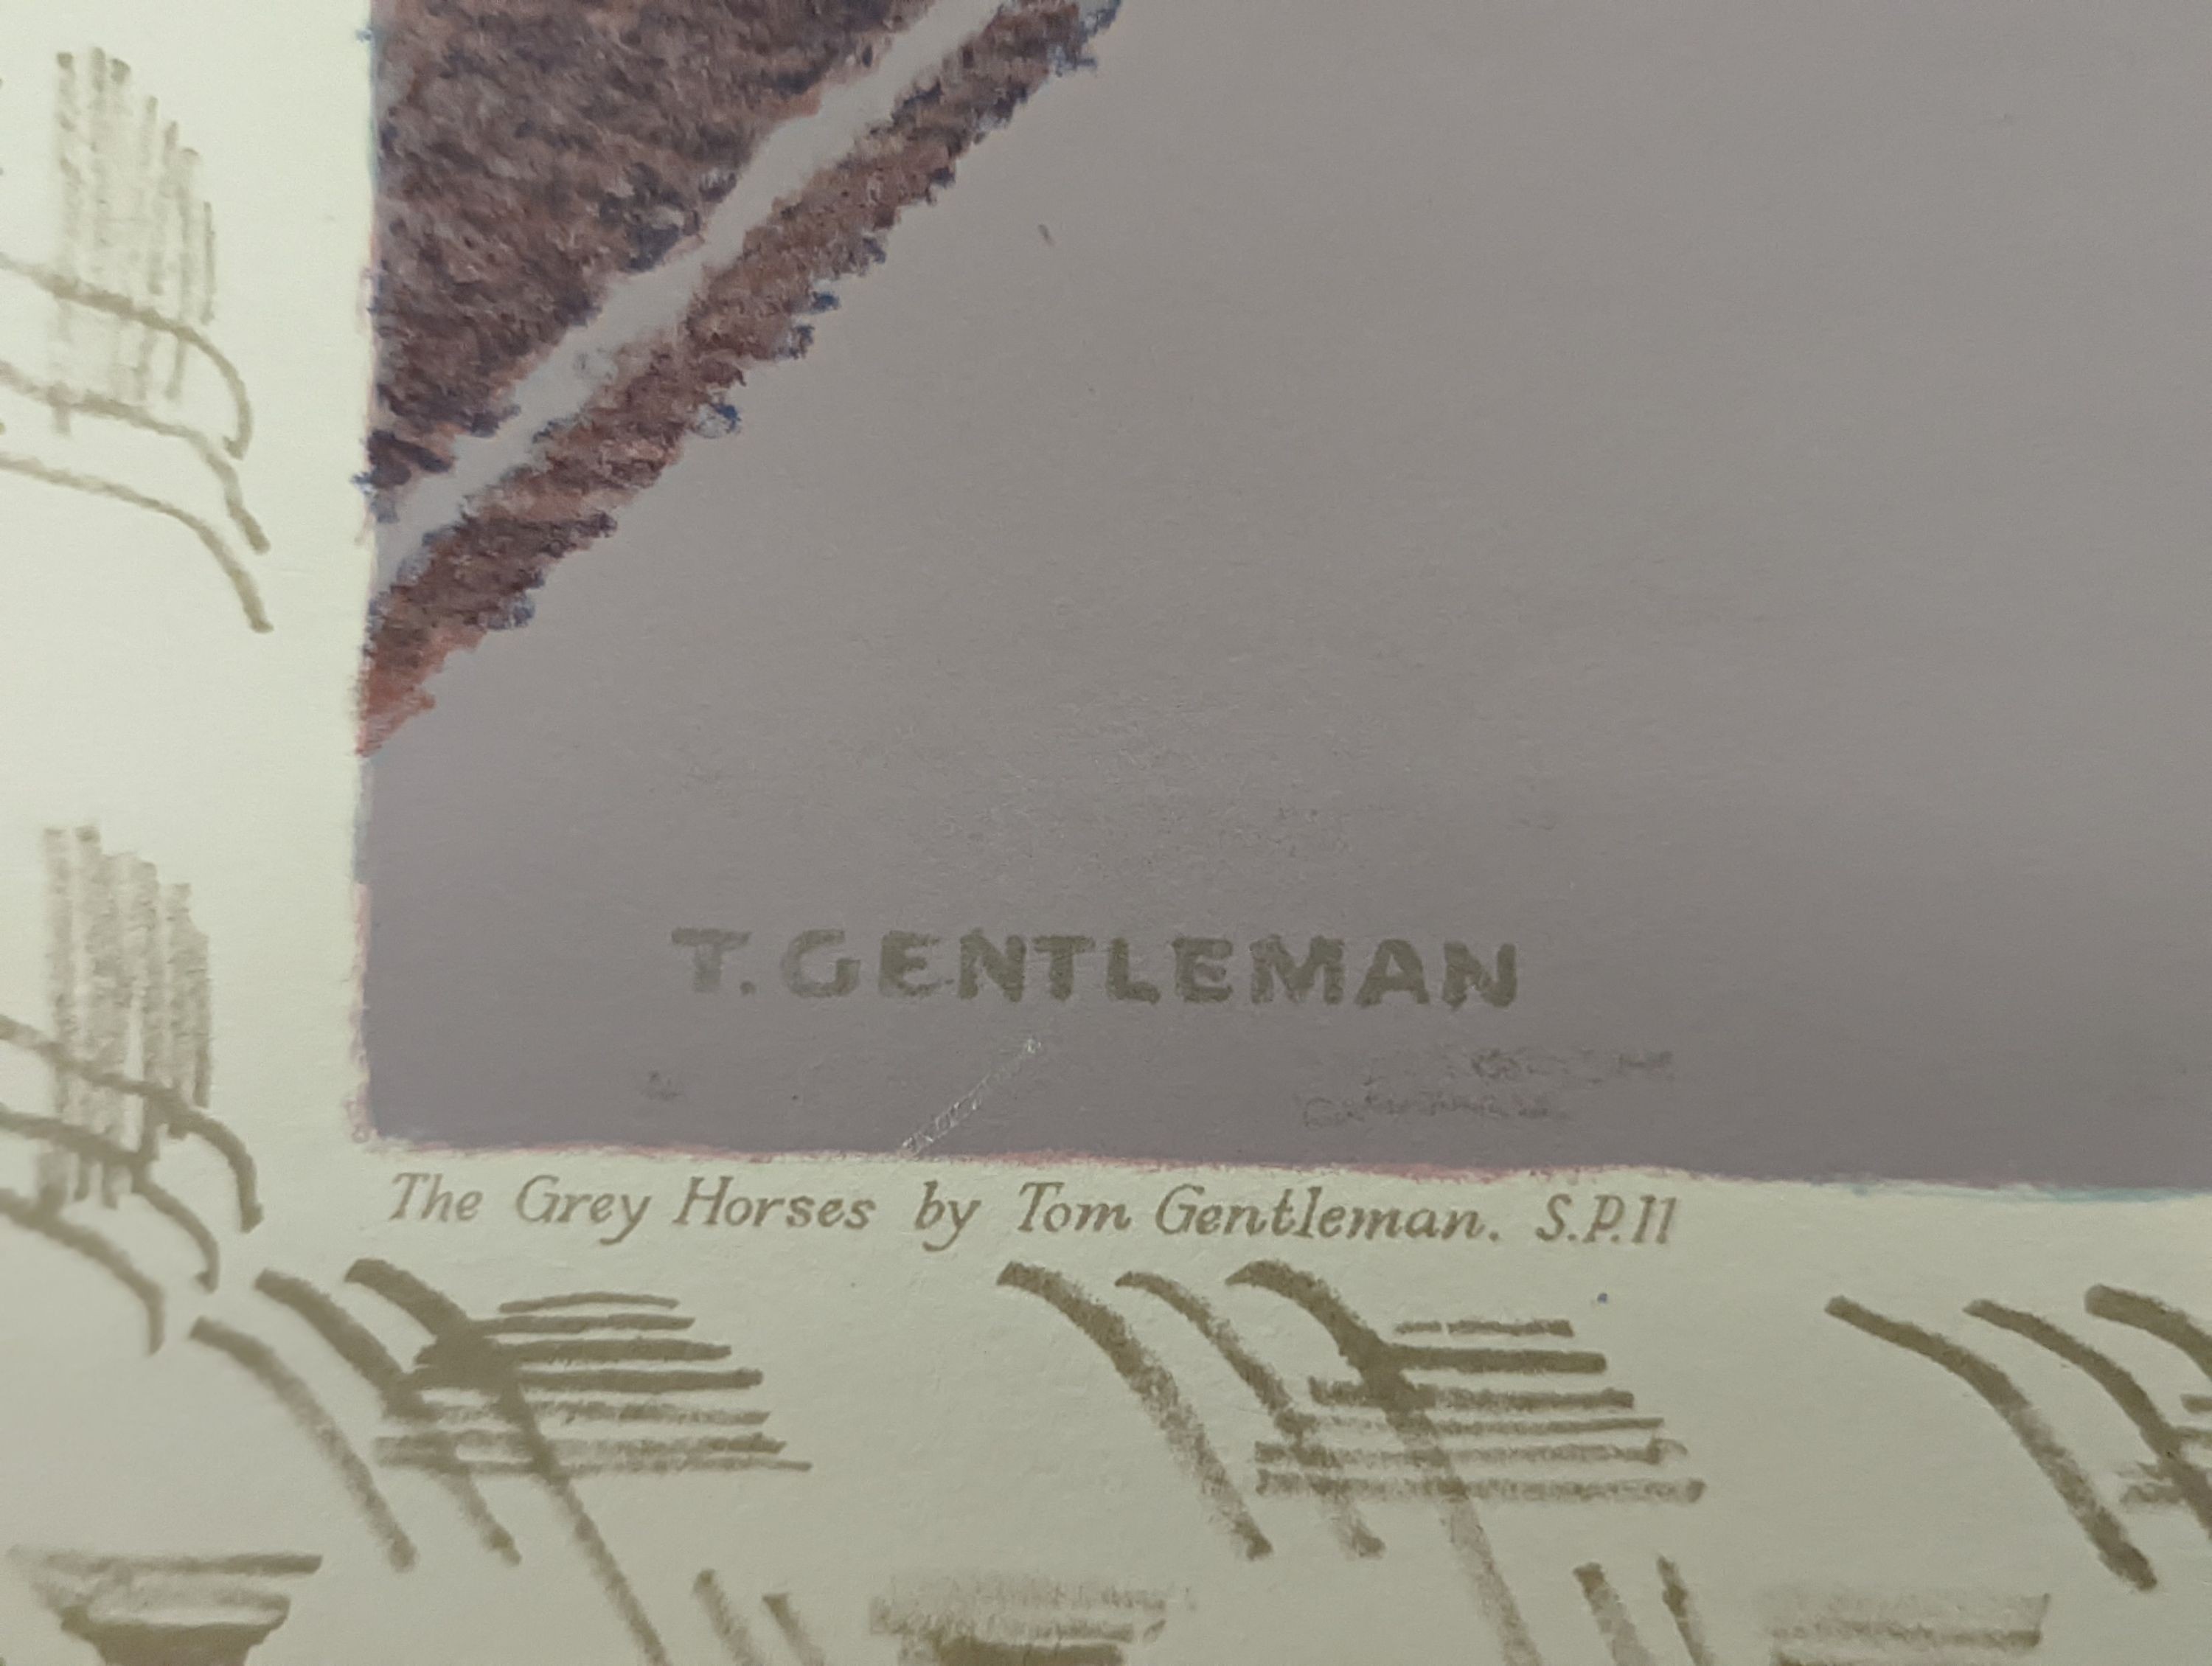 Tom Gentleman (1882-1966), lithograph, school print, The Grey Horses (SP11), 50 x 74cm, unframed